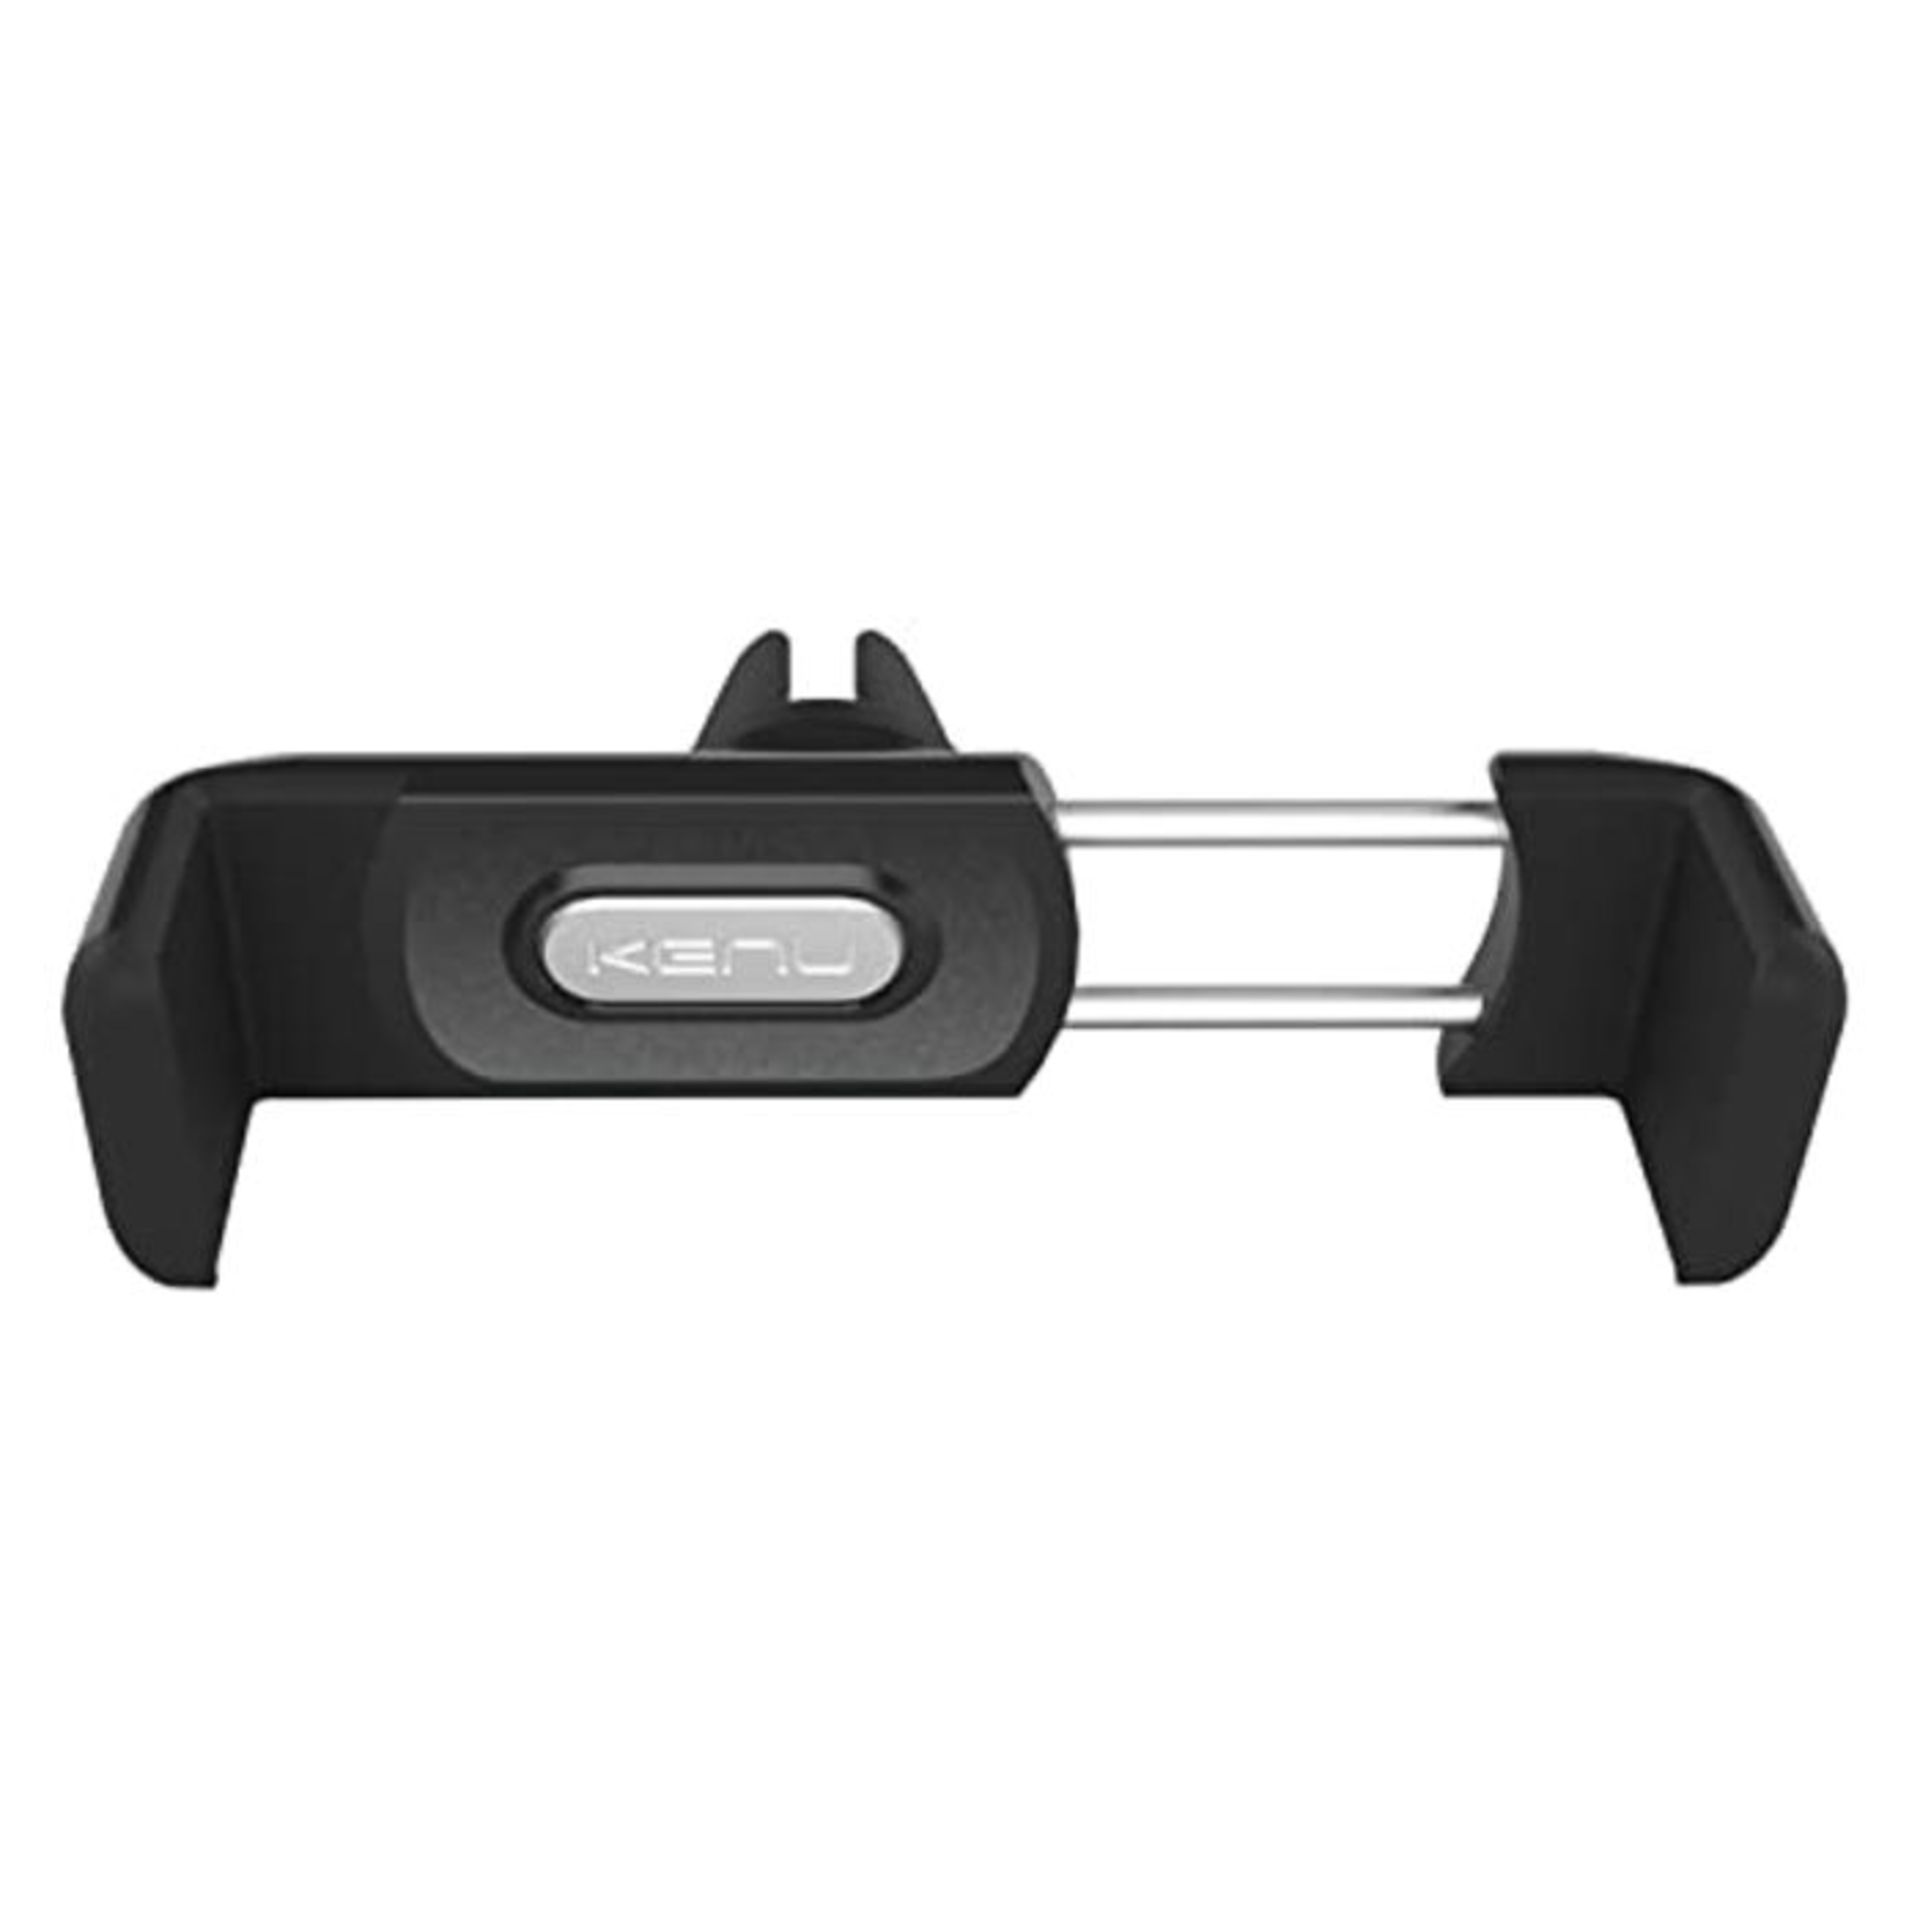 Kenu Airframe+ kenu012 Rotating Air Vent Mobile Phone Cradle Car Holder for Smartphone - Image 3 of 6